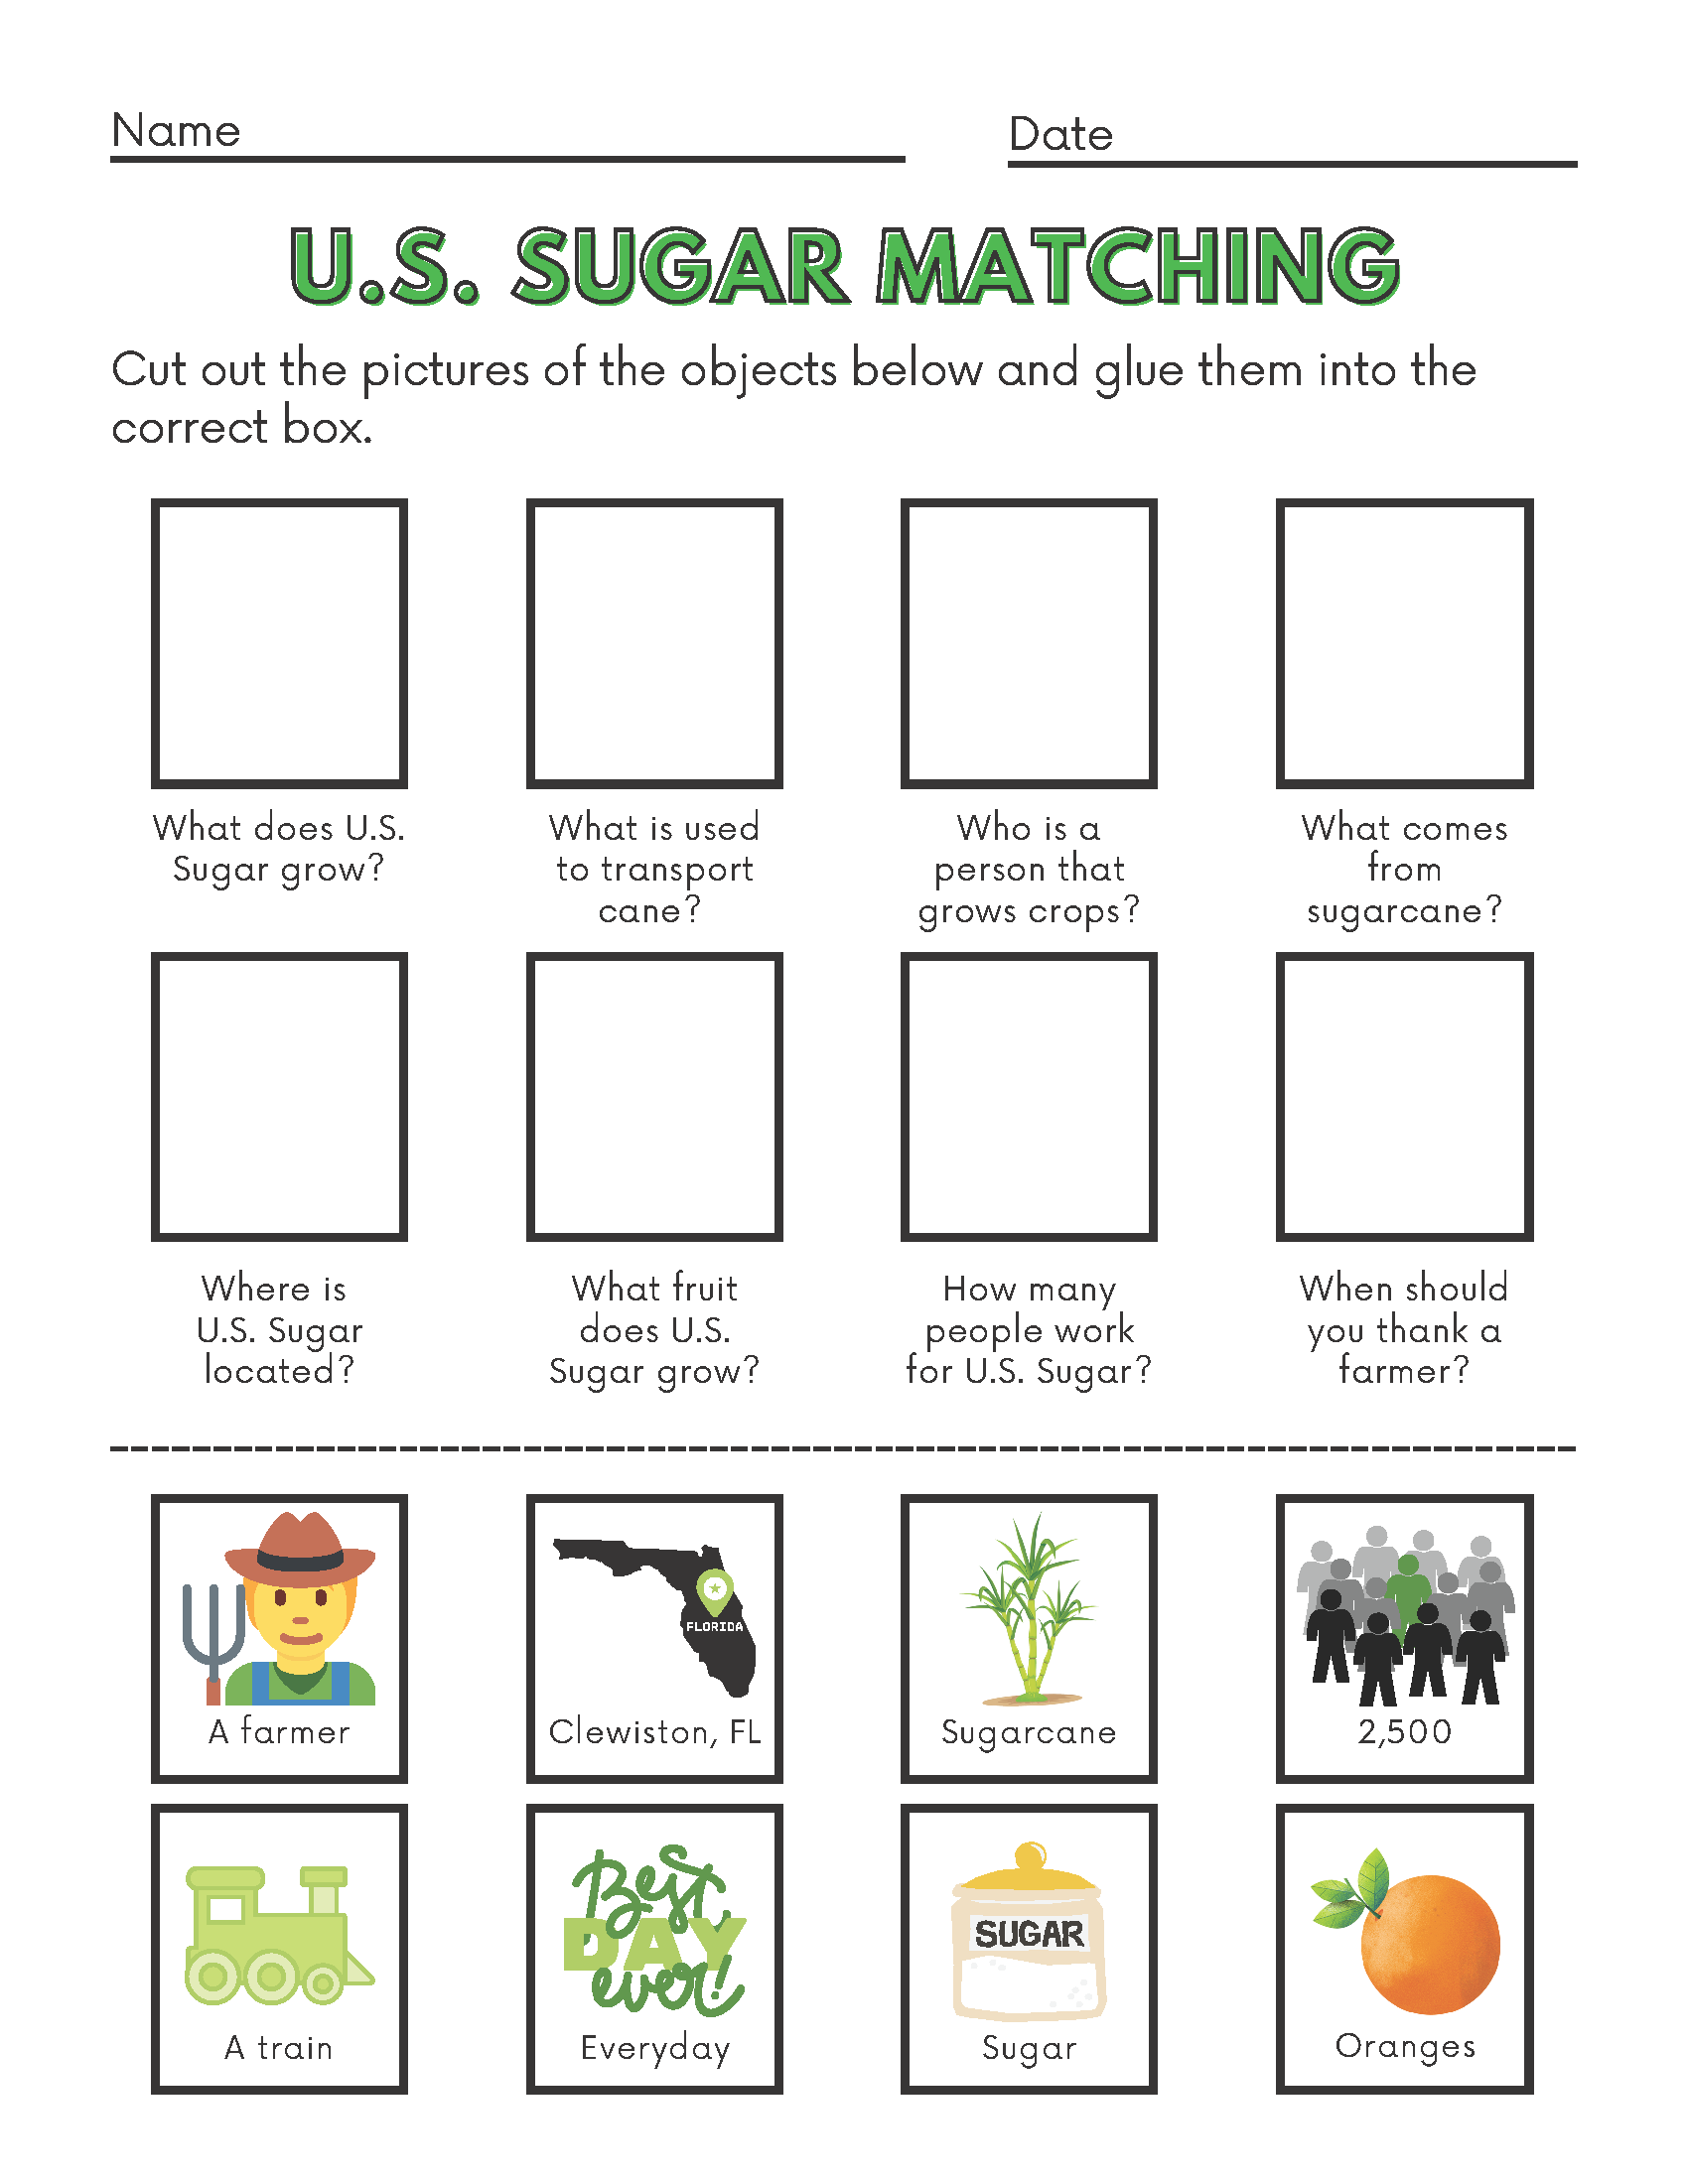 U.S. Sugar Matching